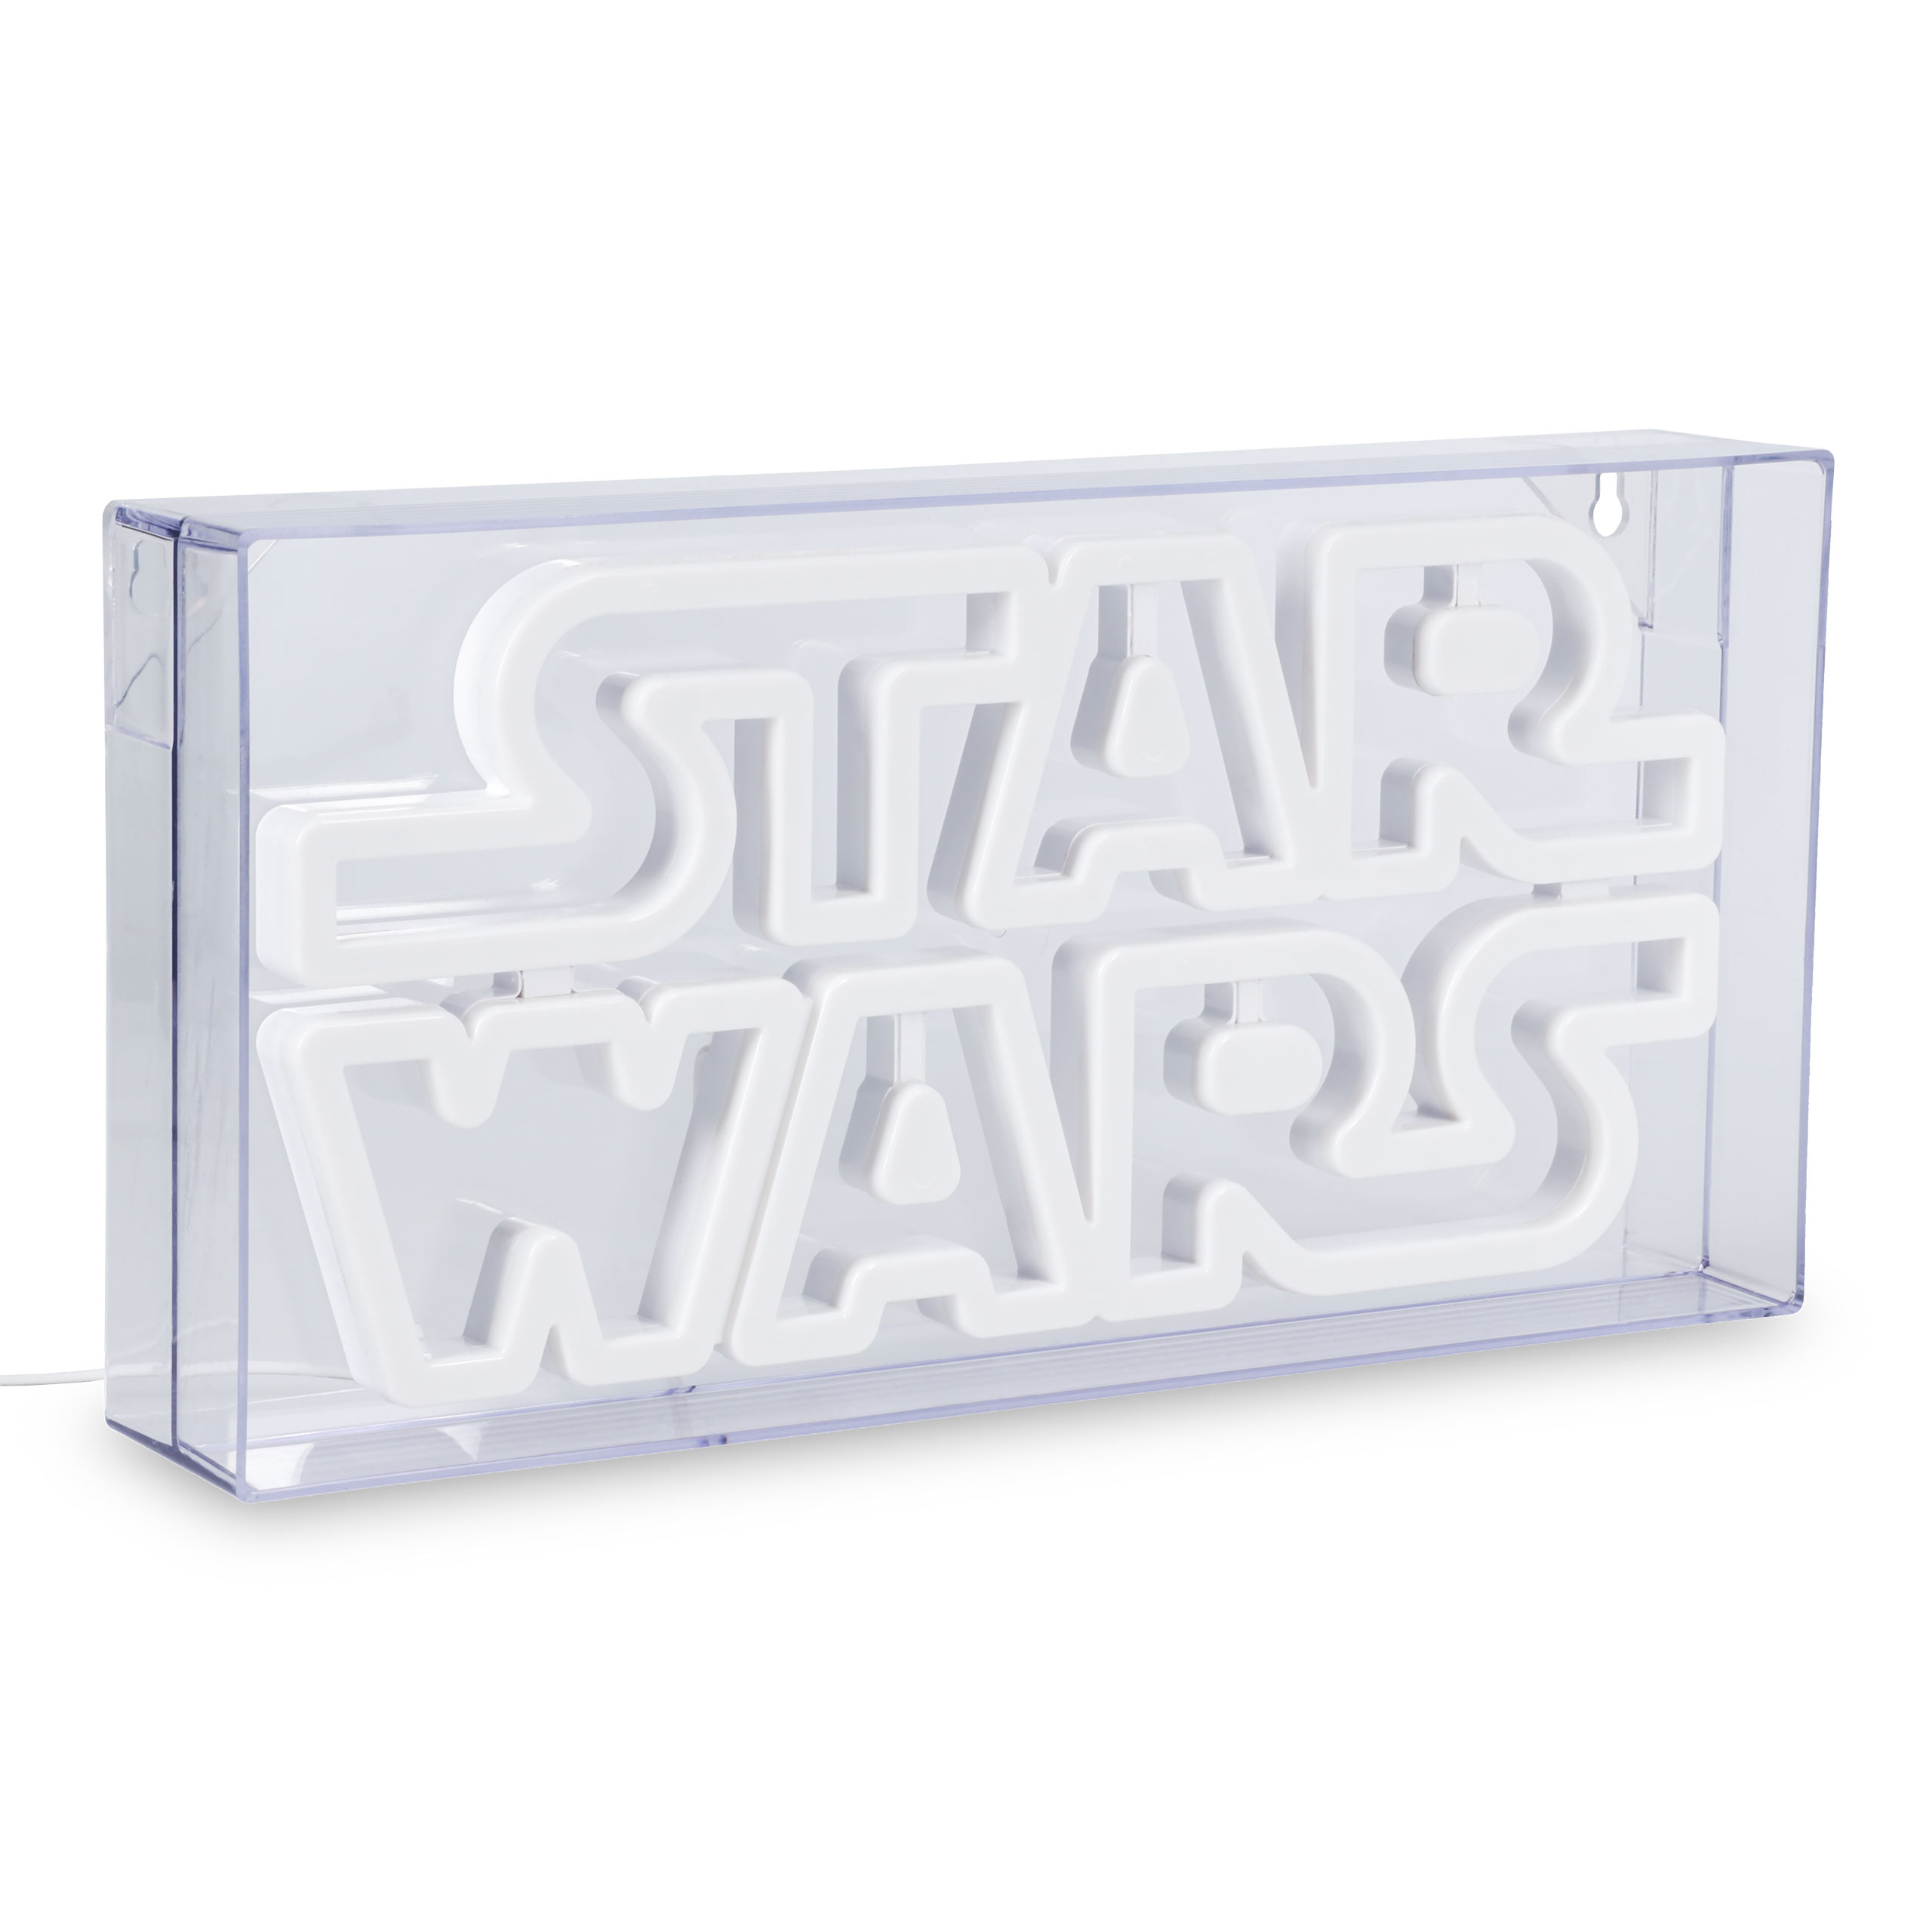 Star Wars - Neon Logo Lamp